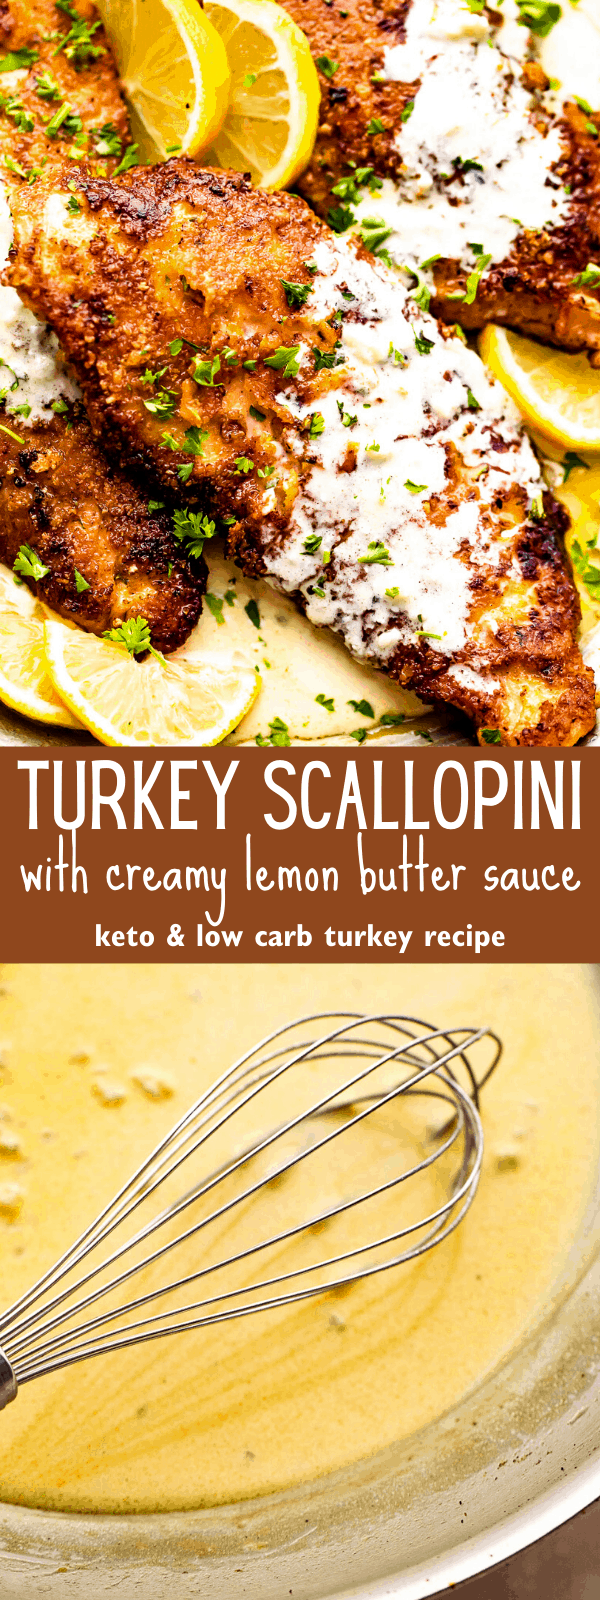 Turkey Scallopini with Creamy Lemon Sauce Recipe | Diethood